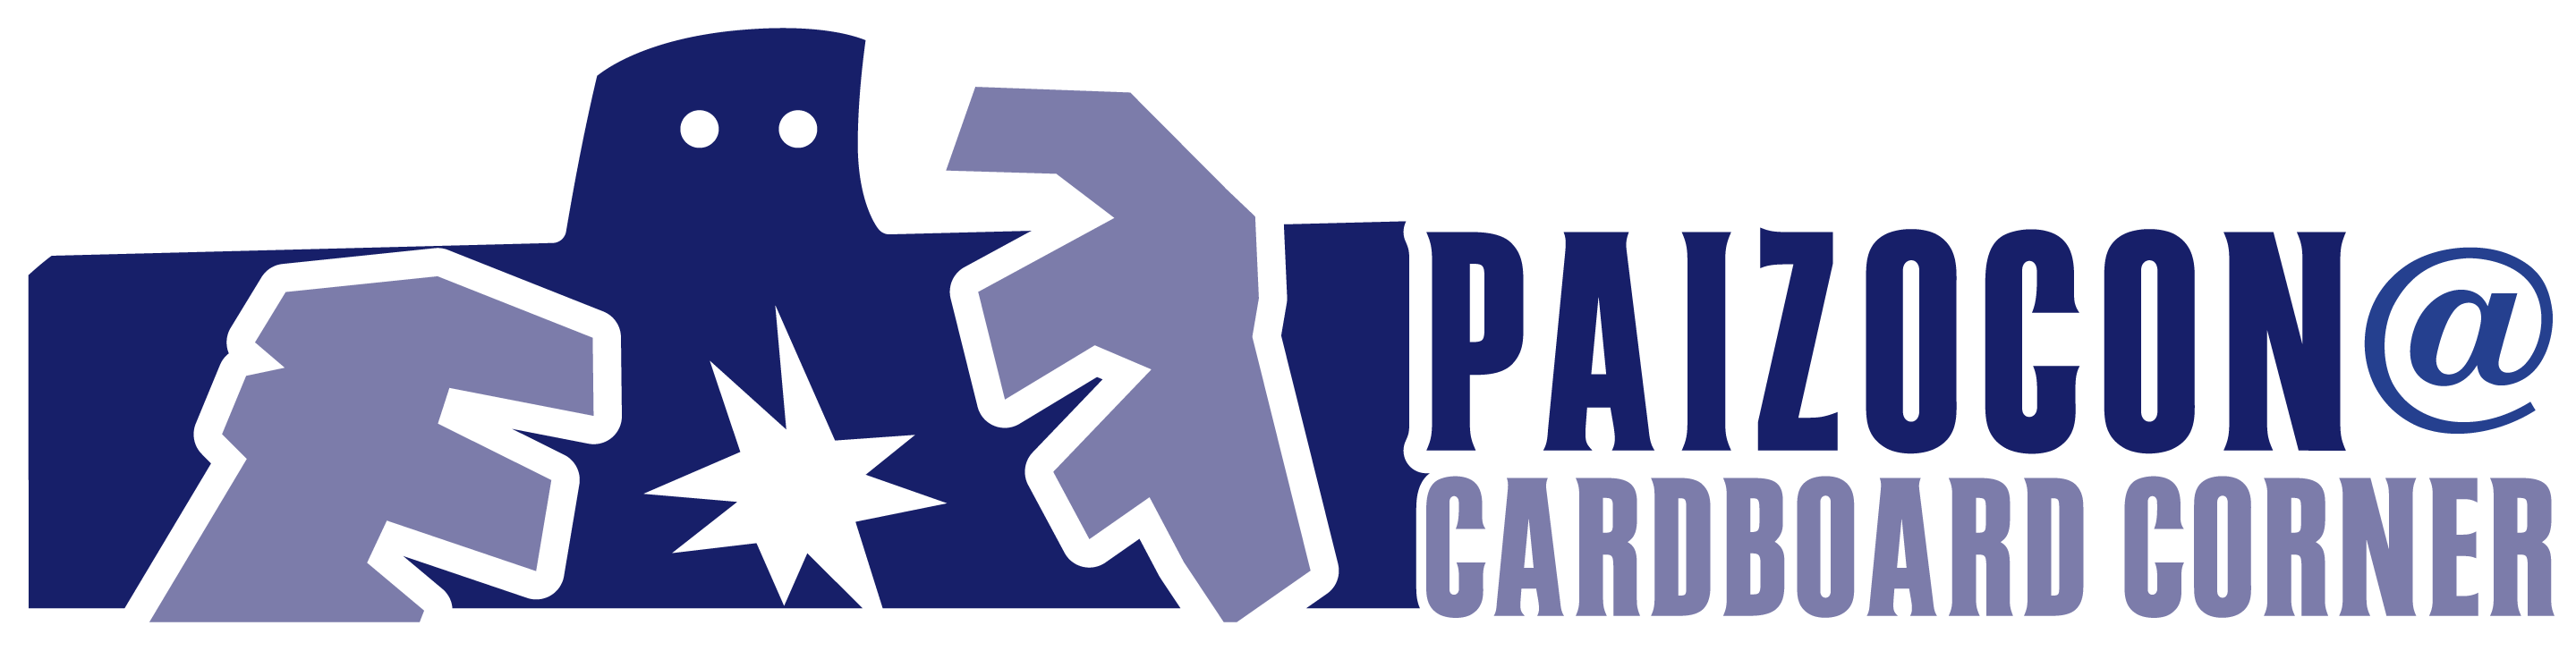 PaizoCon@ Cardboard Corner Logo